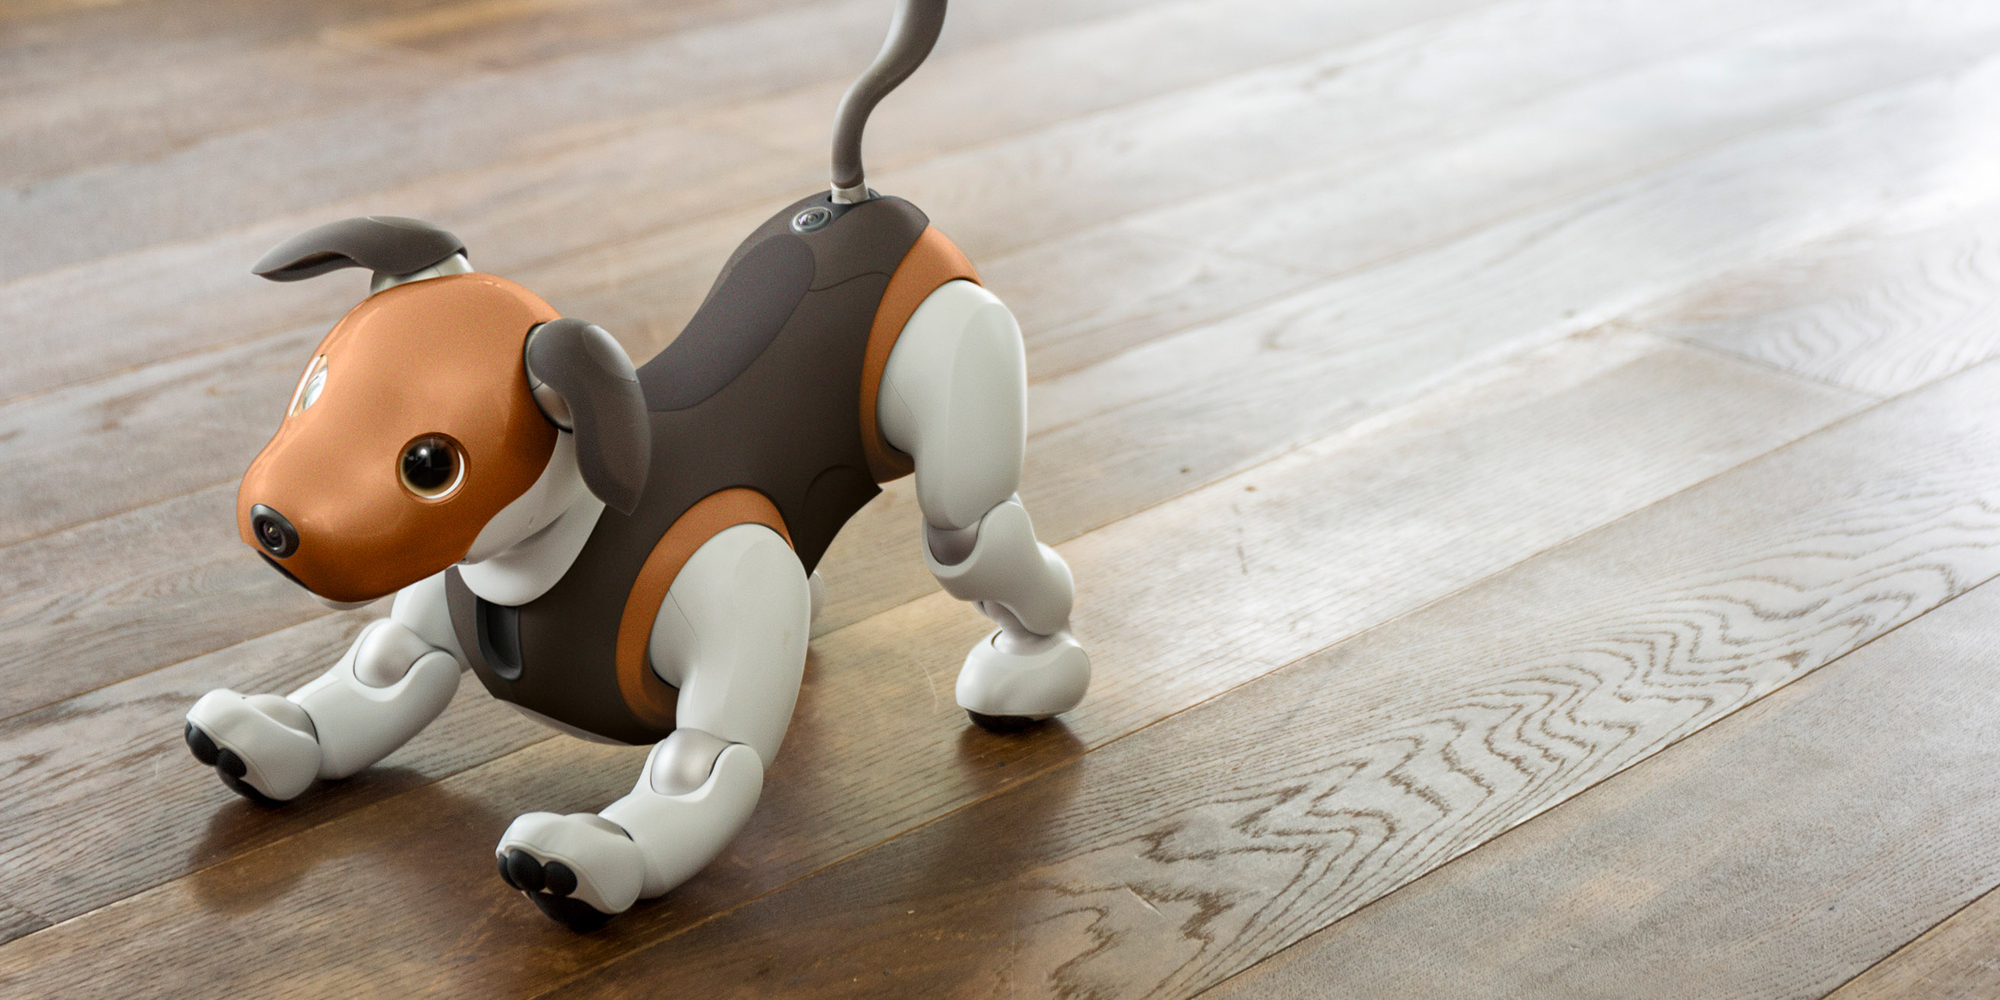 Sony unveils new beagleinspired Aibo robotic dog 9to5Toys